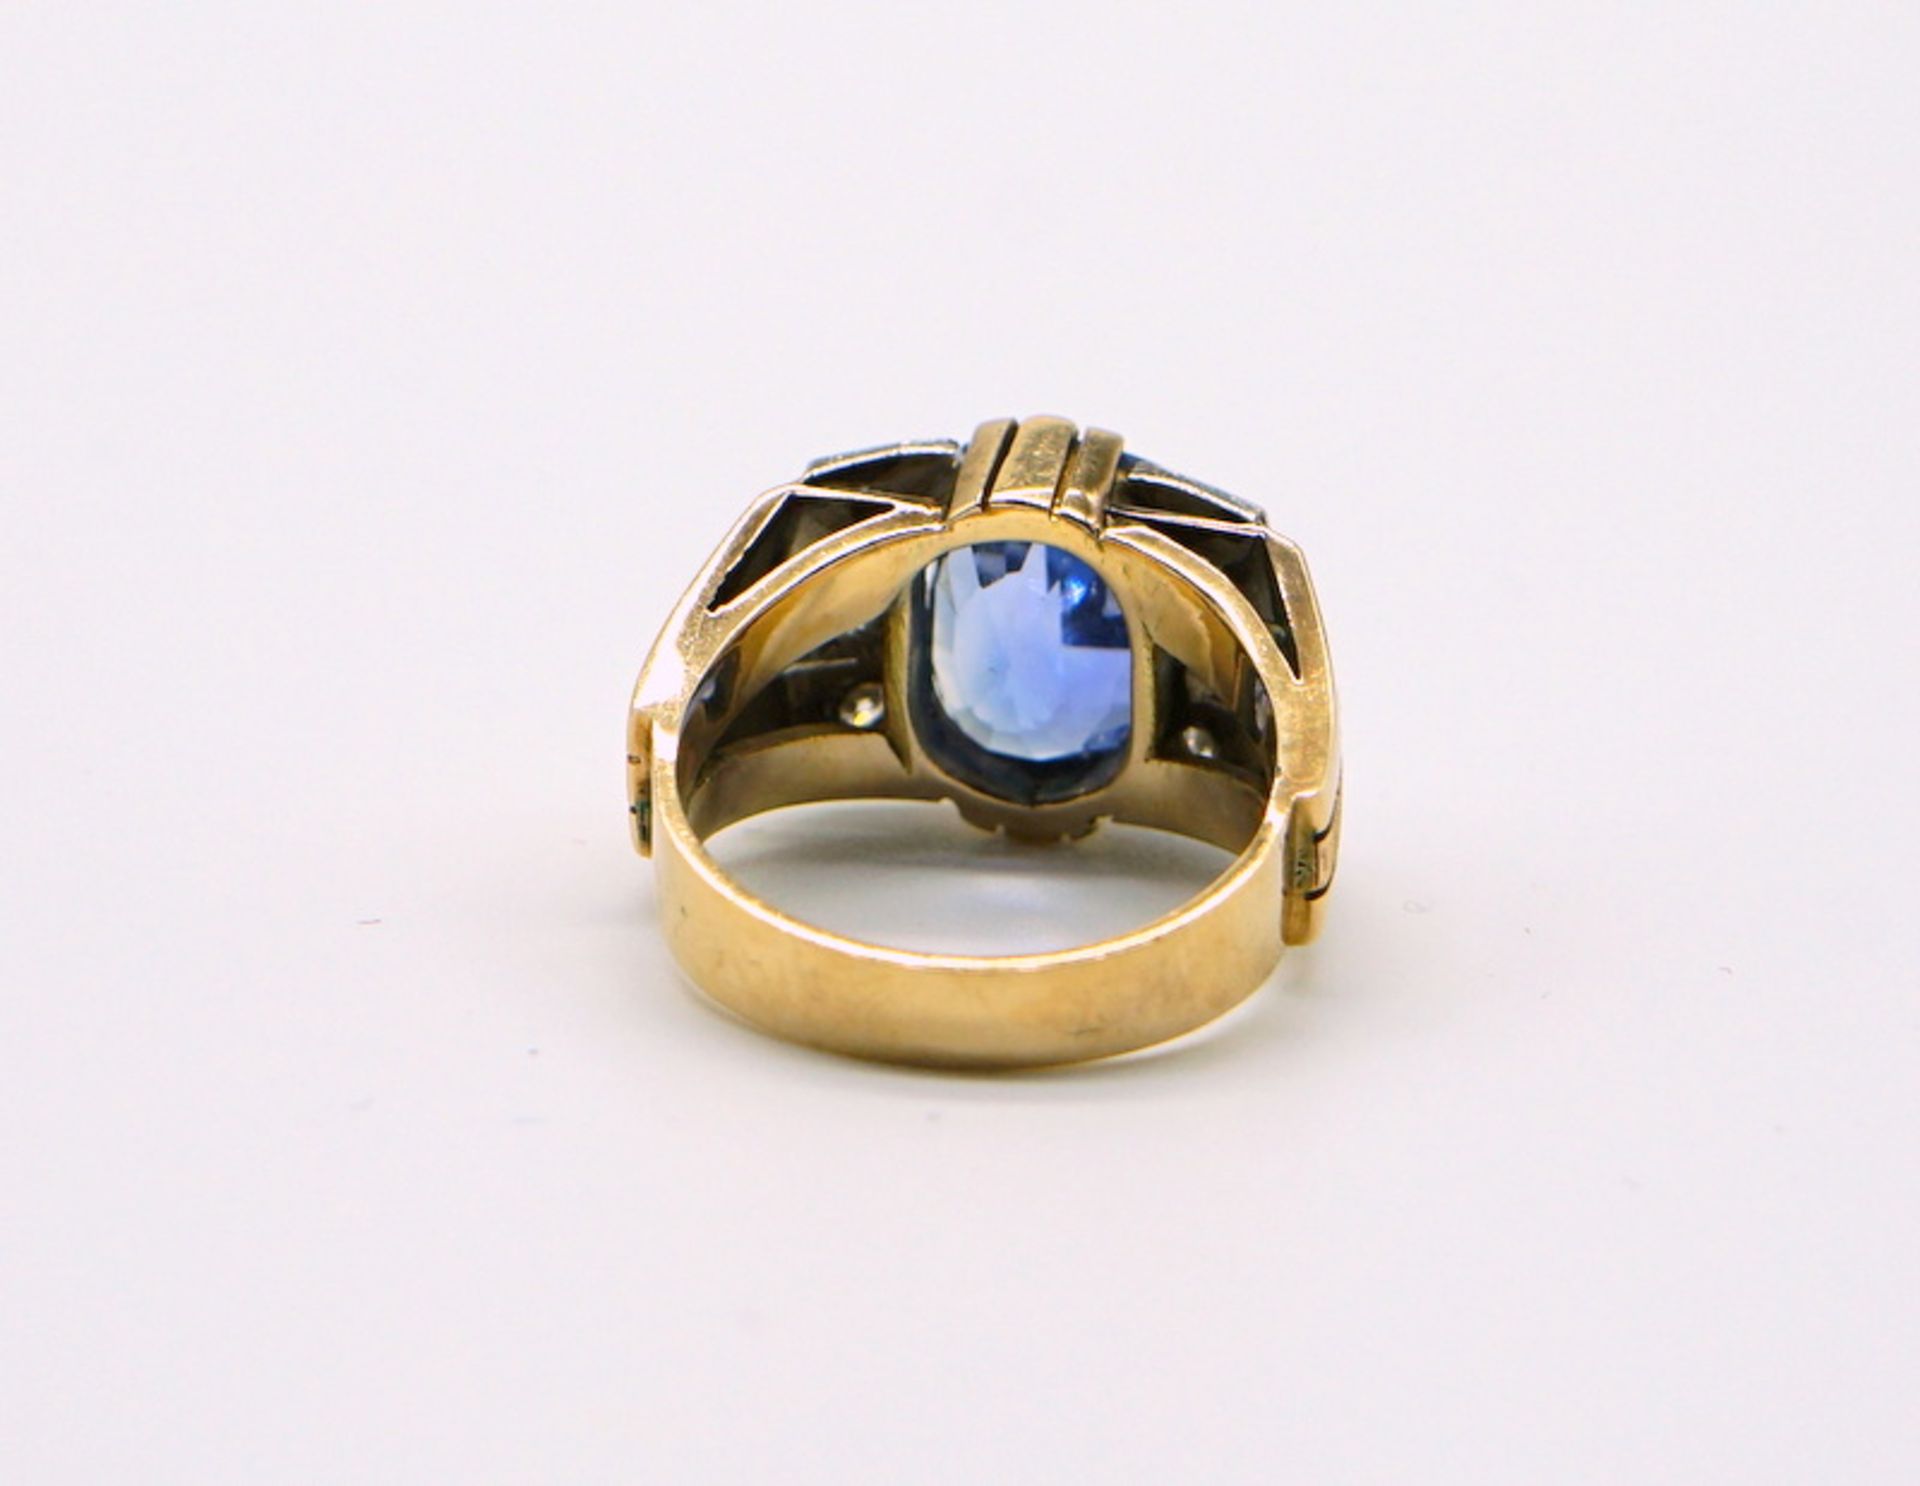 Saphir-Brillant-Ring, 585 GG - Image 3 of 3